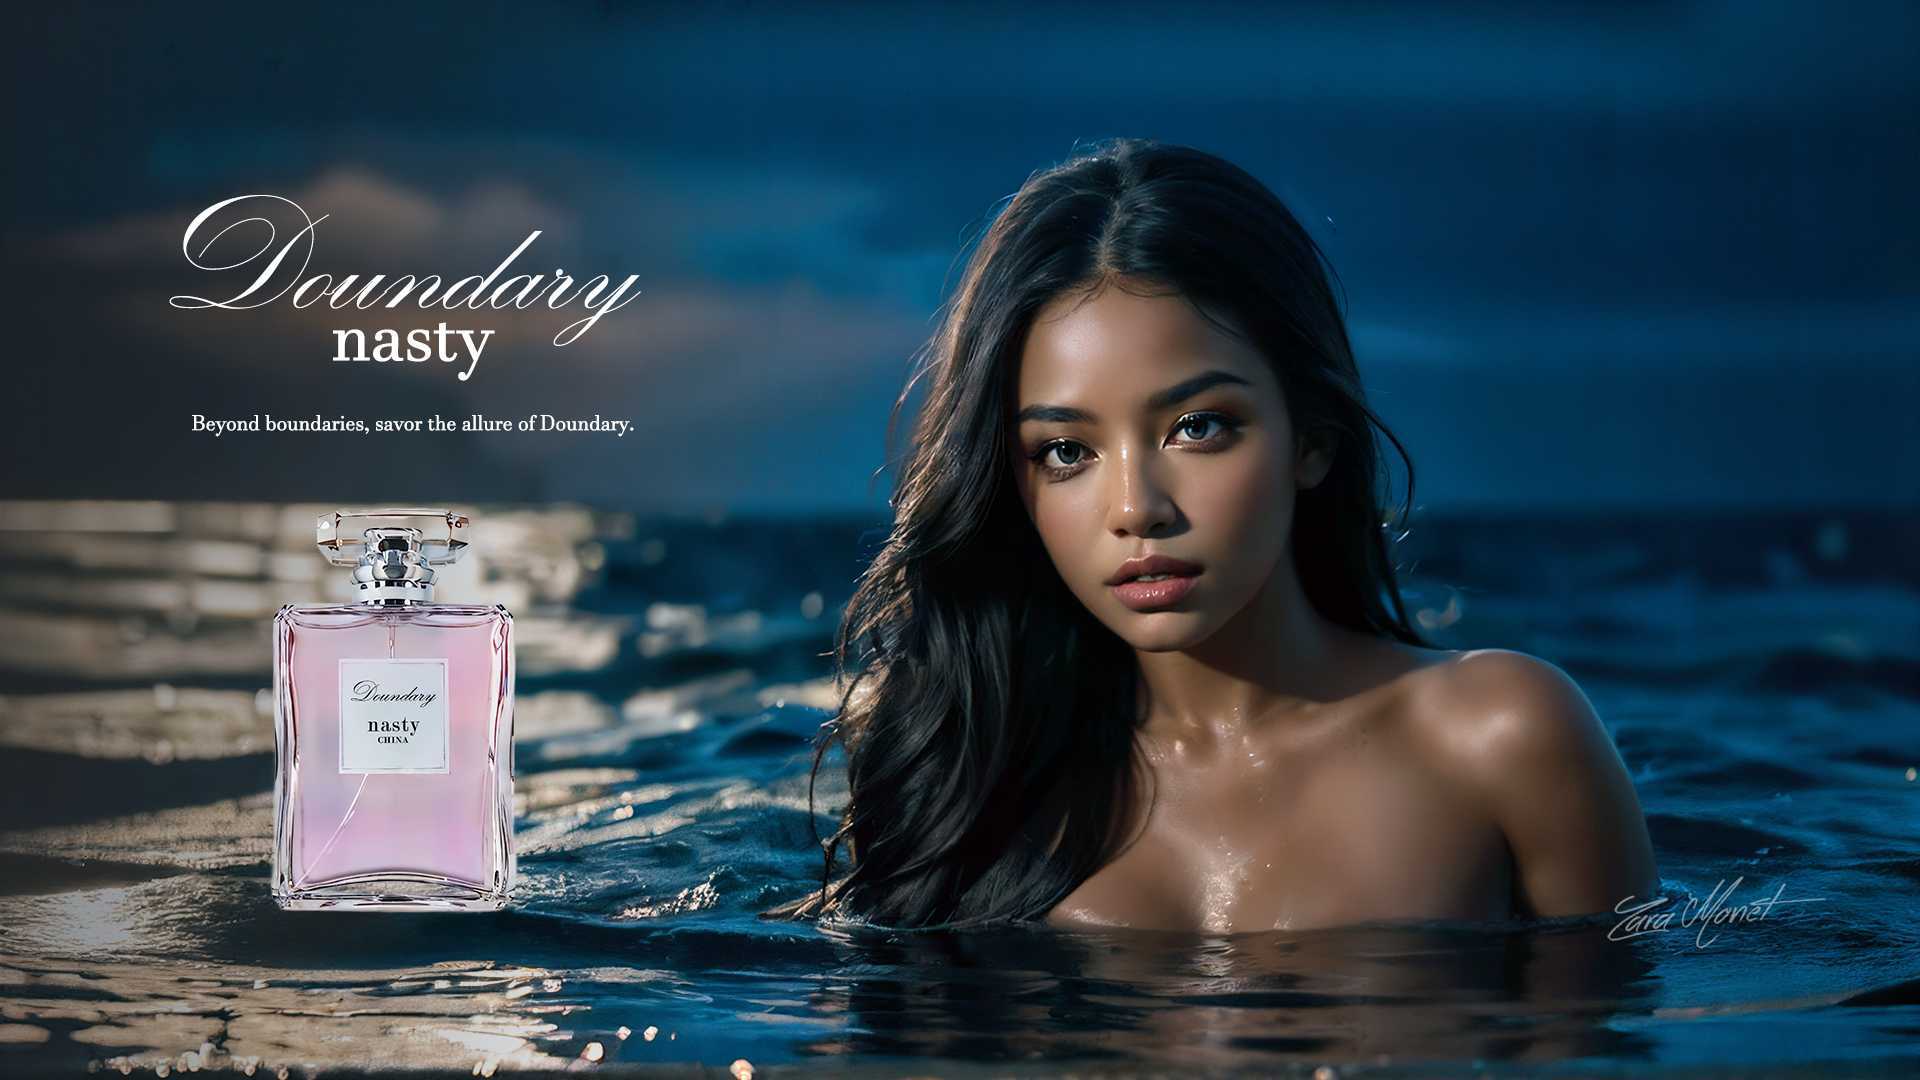 Nasty·Doundary边界香水广告|Zara Monet AI-非商业